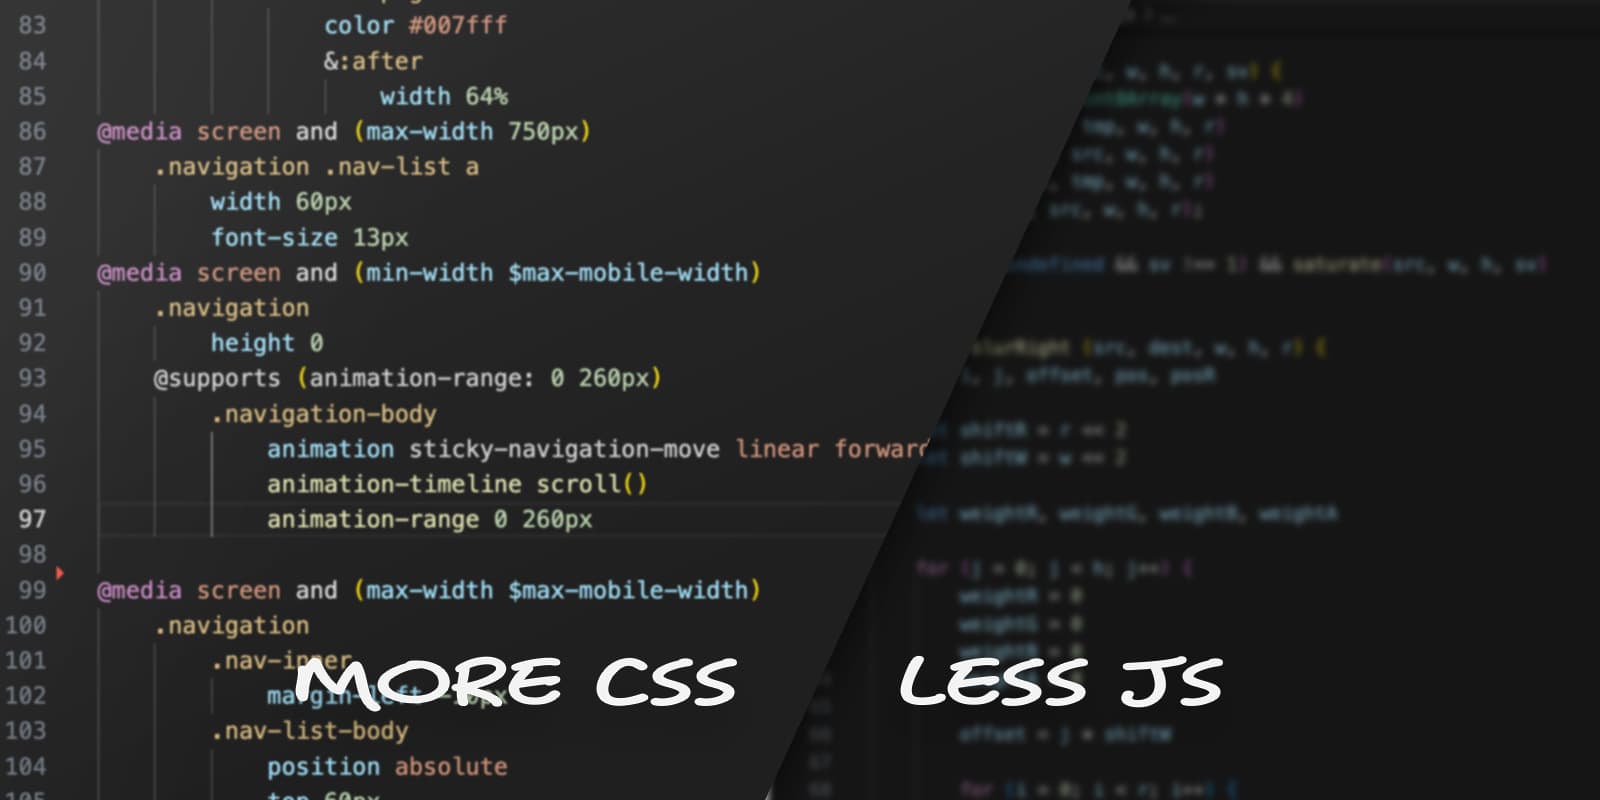 More CSS, less JS